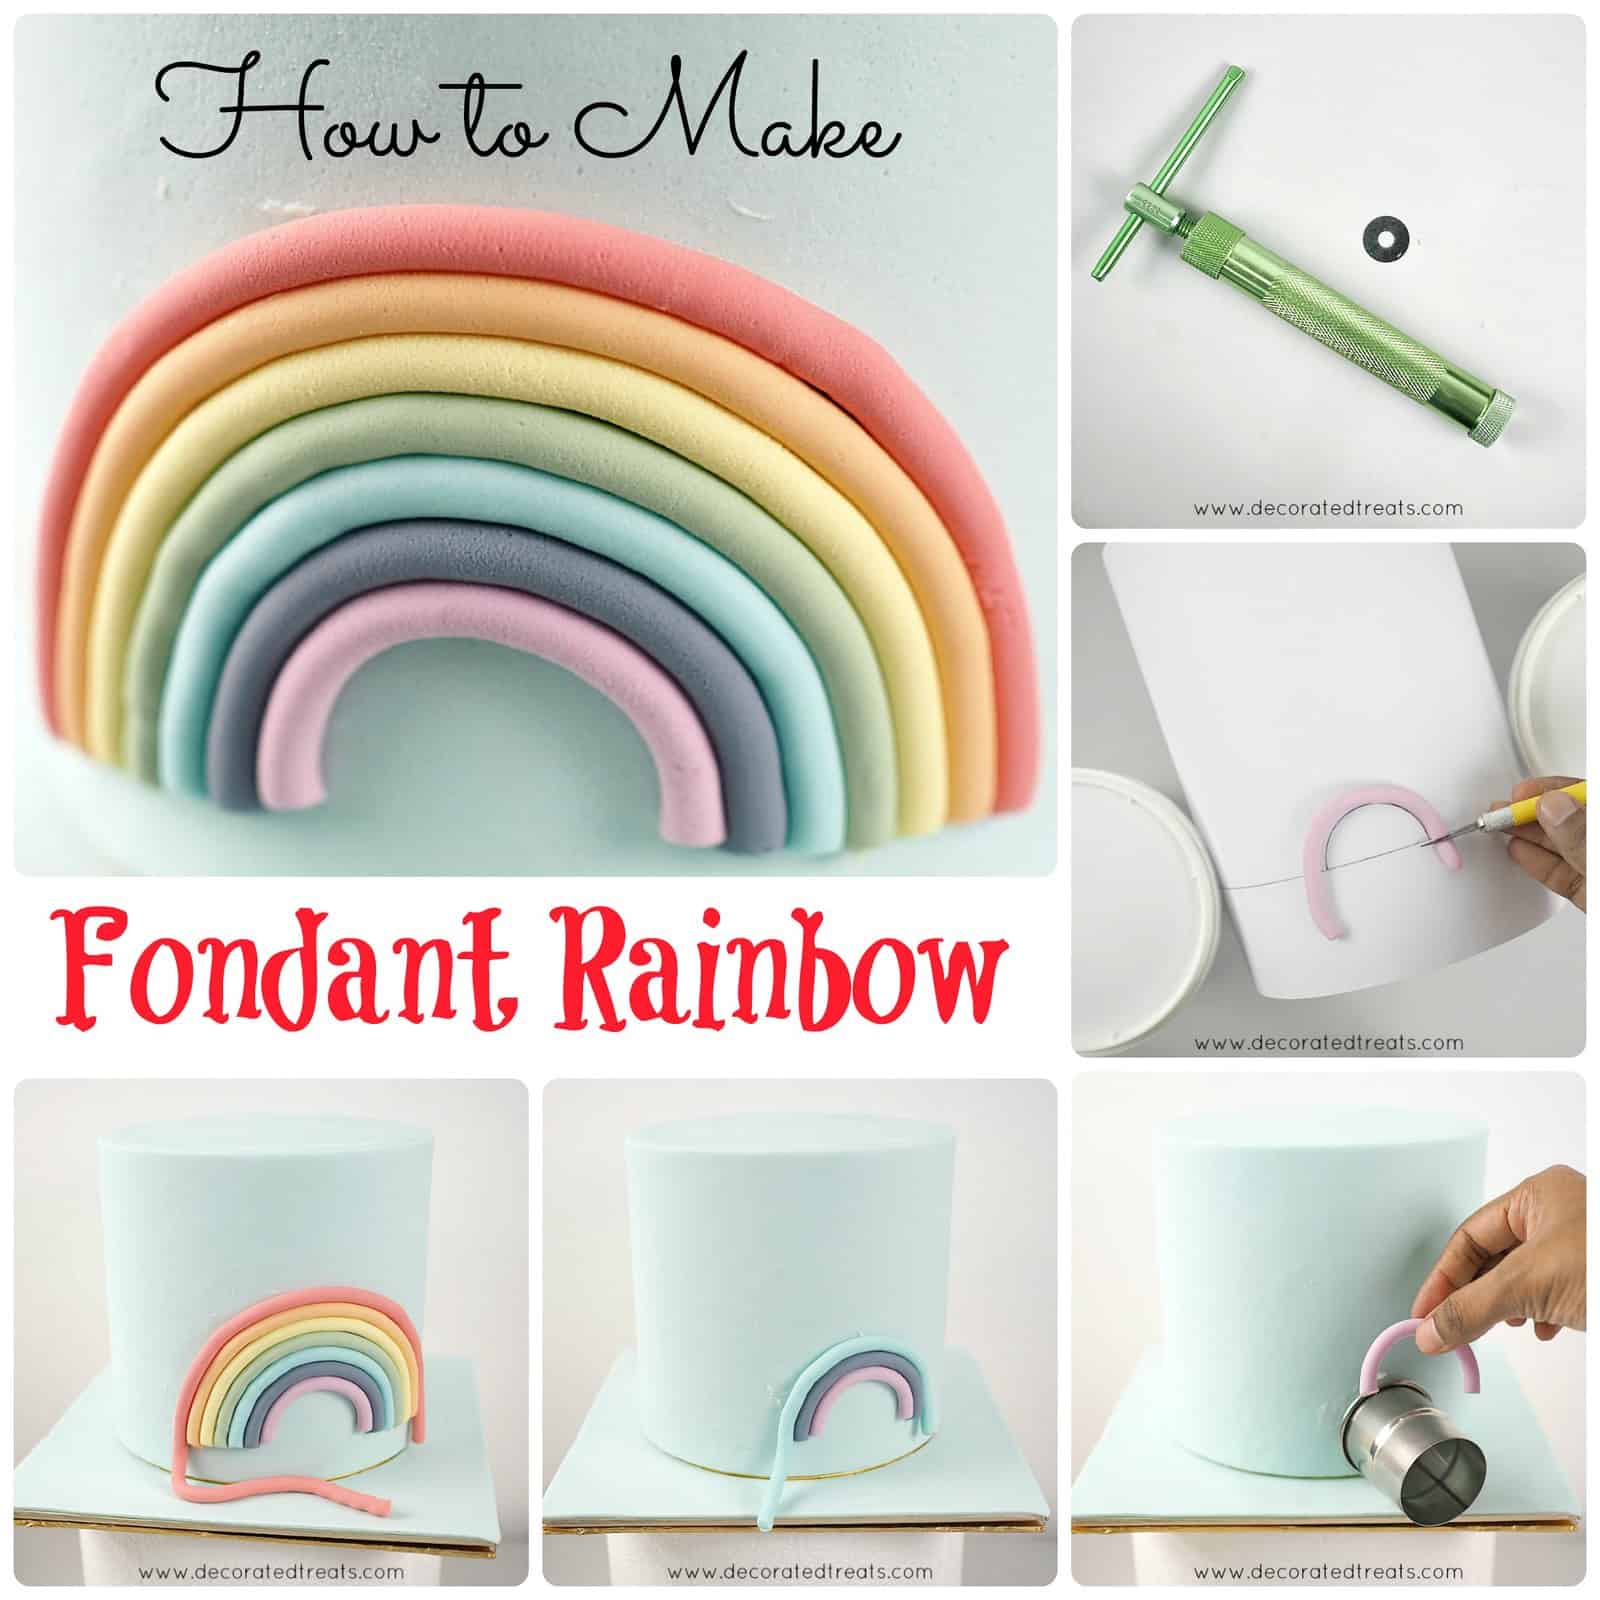 Poster for making fondant rainbow.